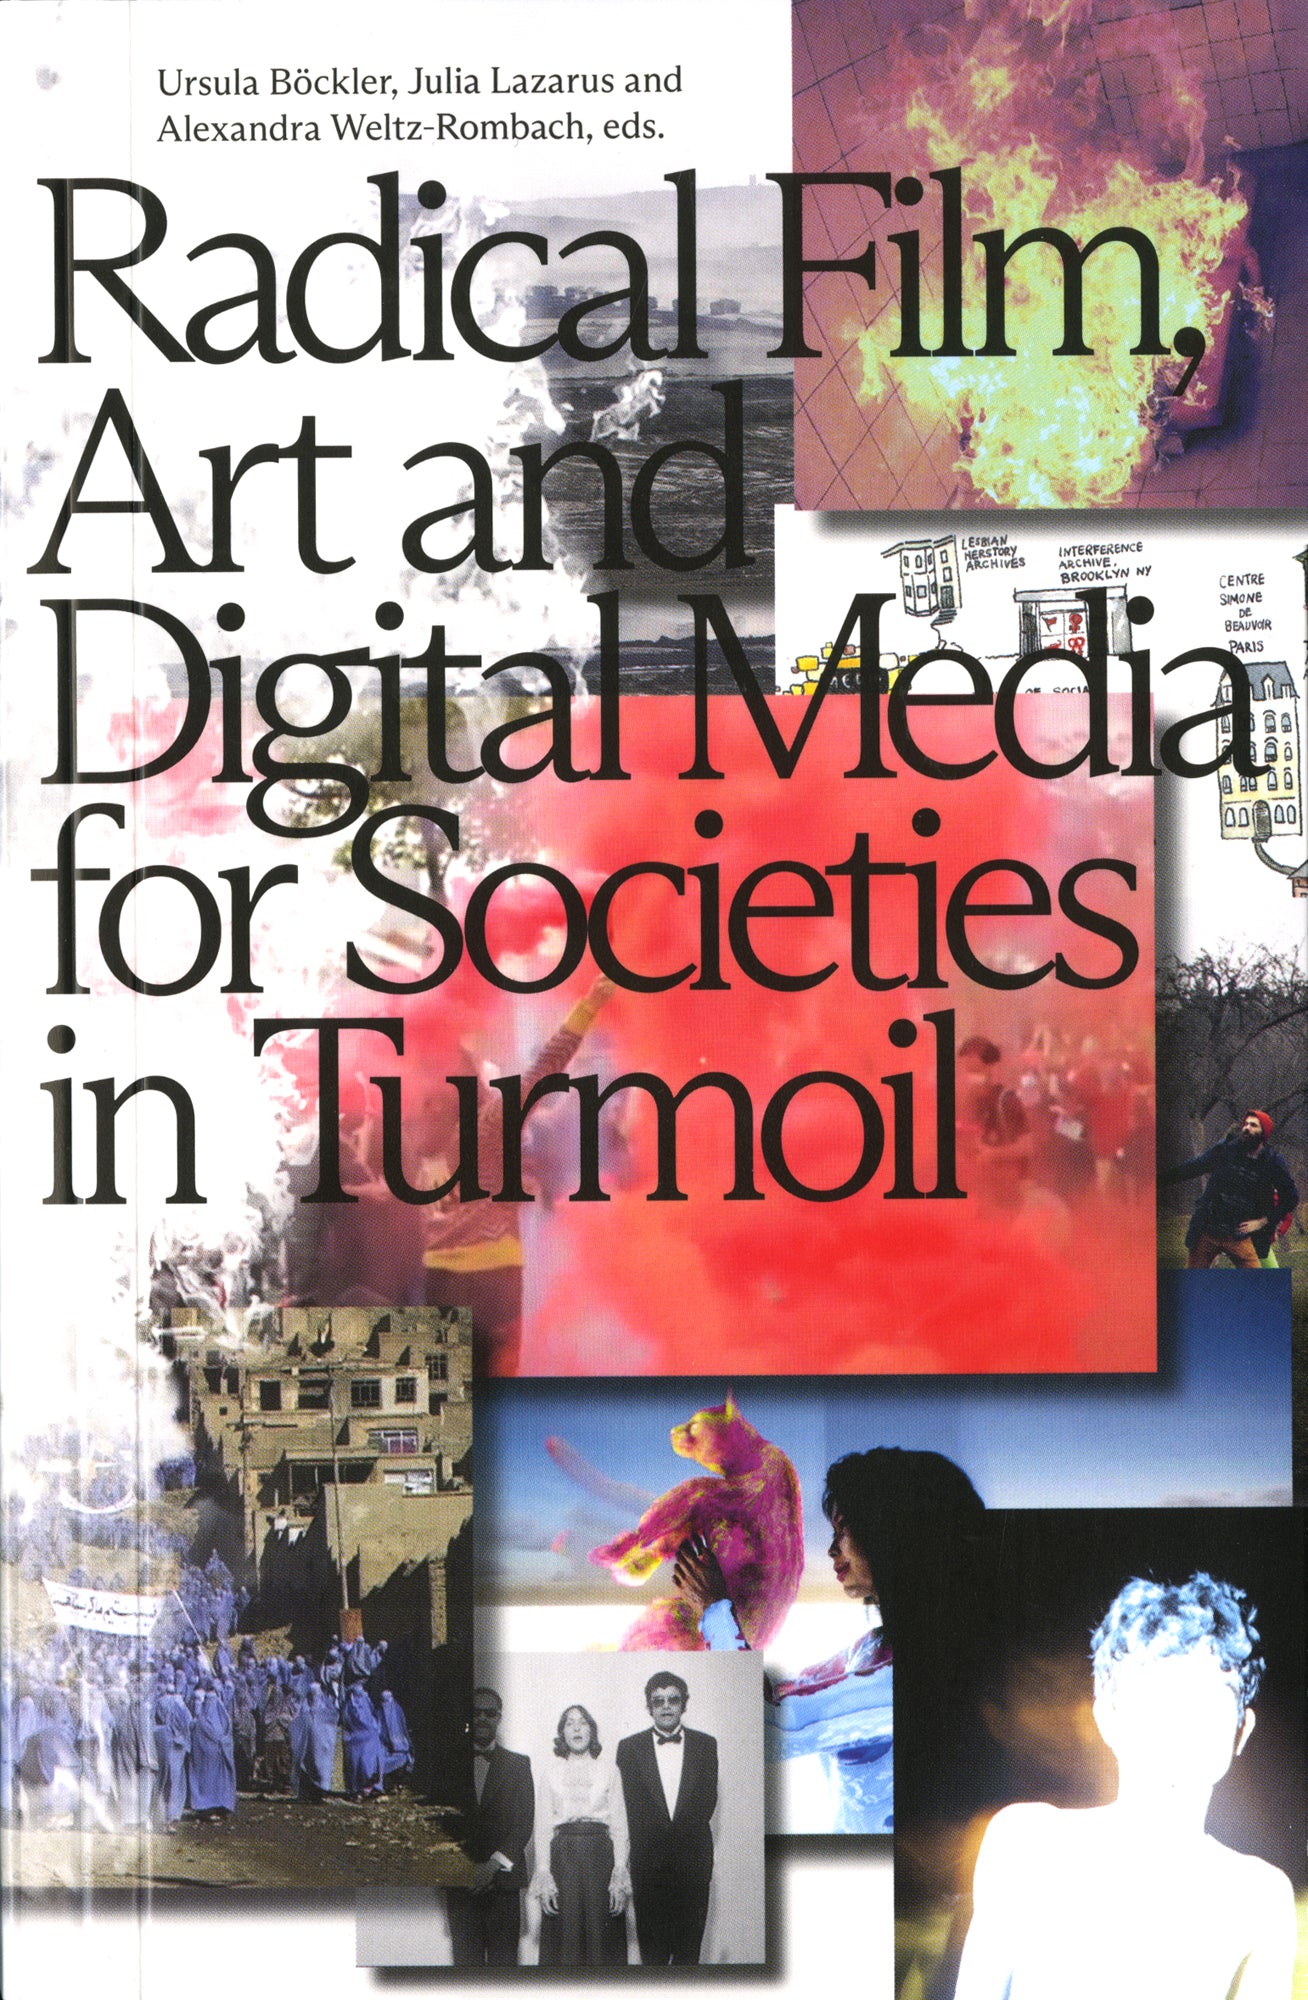 Radical Film, Art and Digital Media for Societies in Turmoil - Ursula Böckler, Julia Lazarus and Alexandra Weltz-Rombach eds.